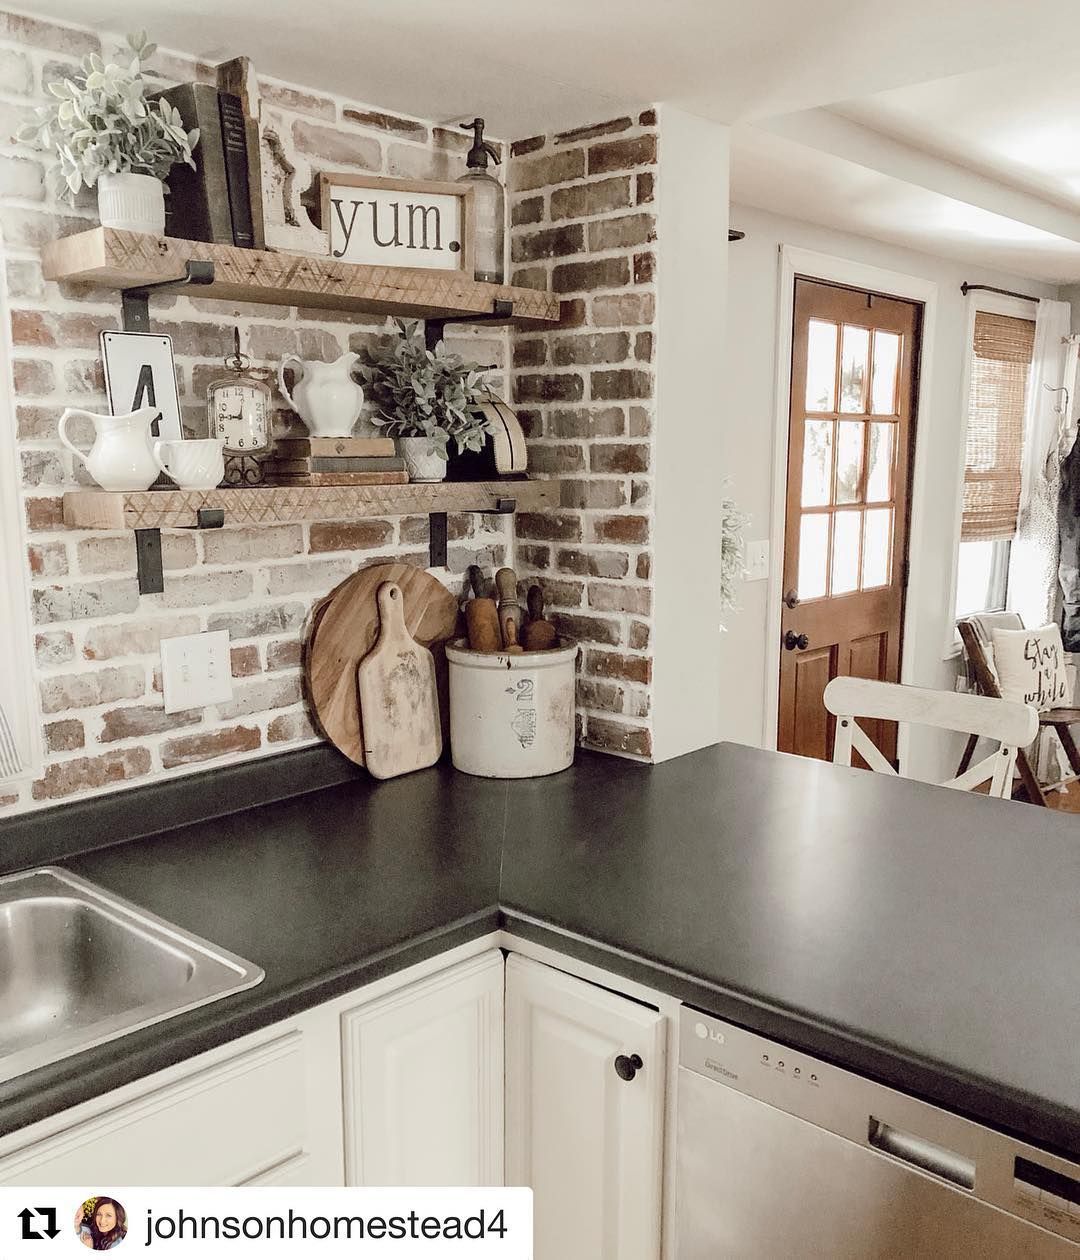 White Brick Backsplash In Kitchen Inspirational Inspired Kitchens On Instagram “here S A Little Inspiration